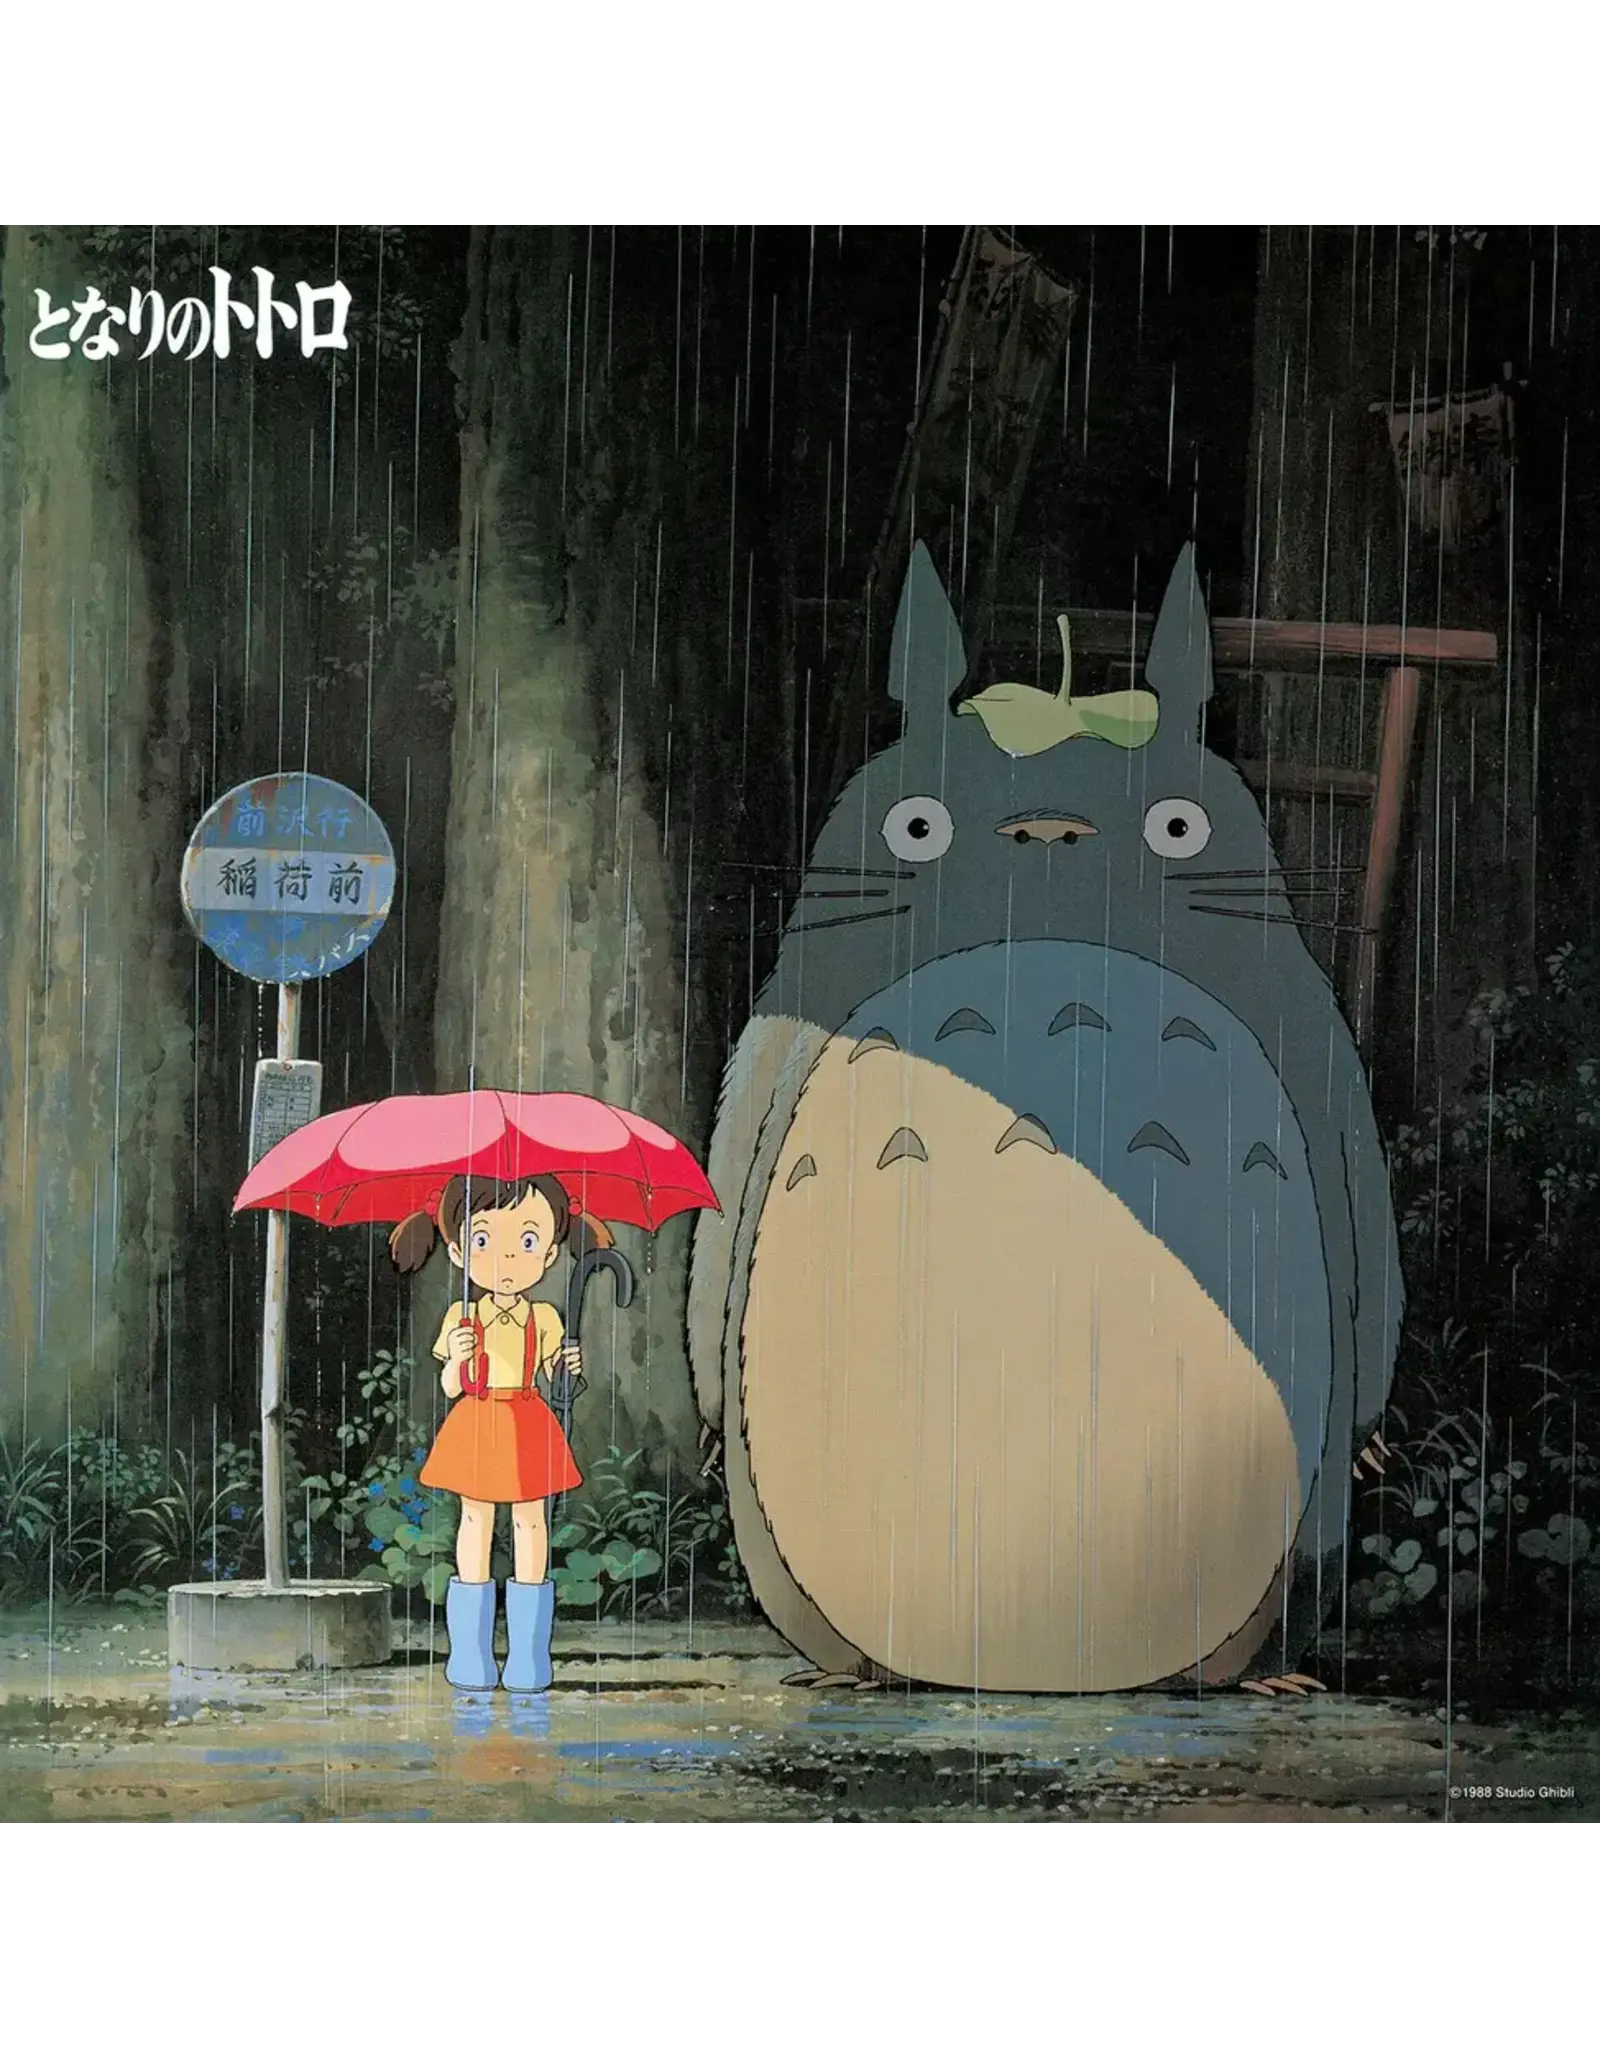 Studio Ghibli Hisaishi, Joe: My Neighbor Totoro: Image Album LP